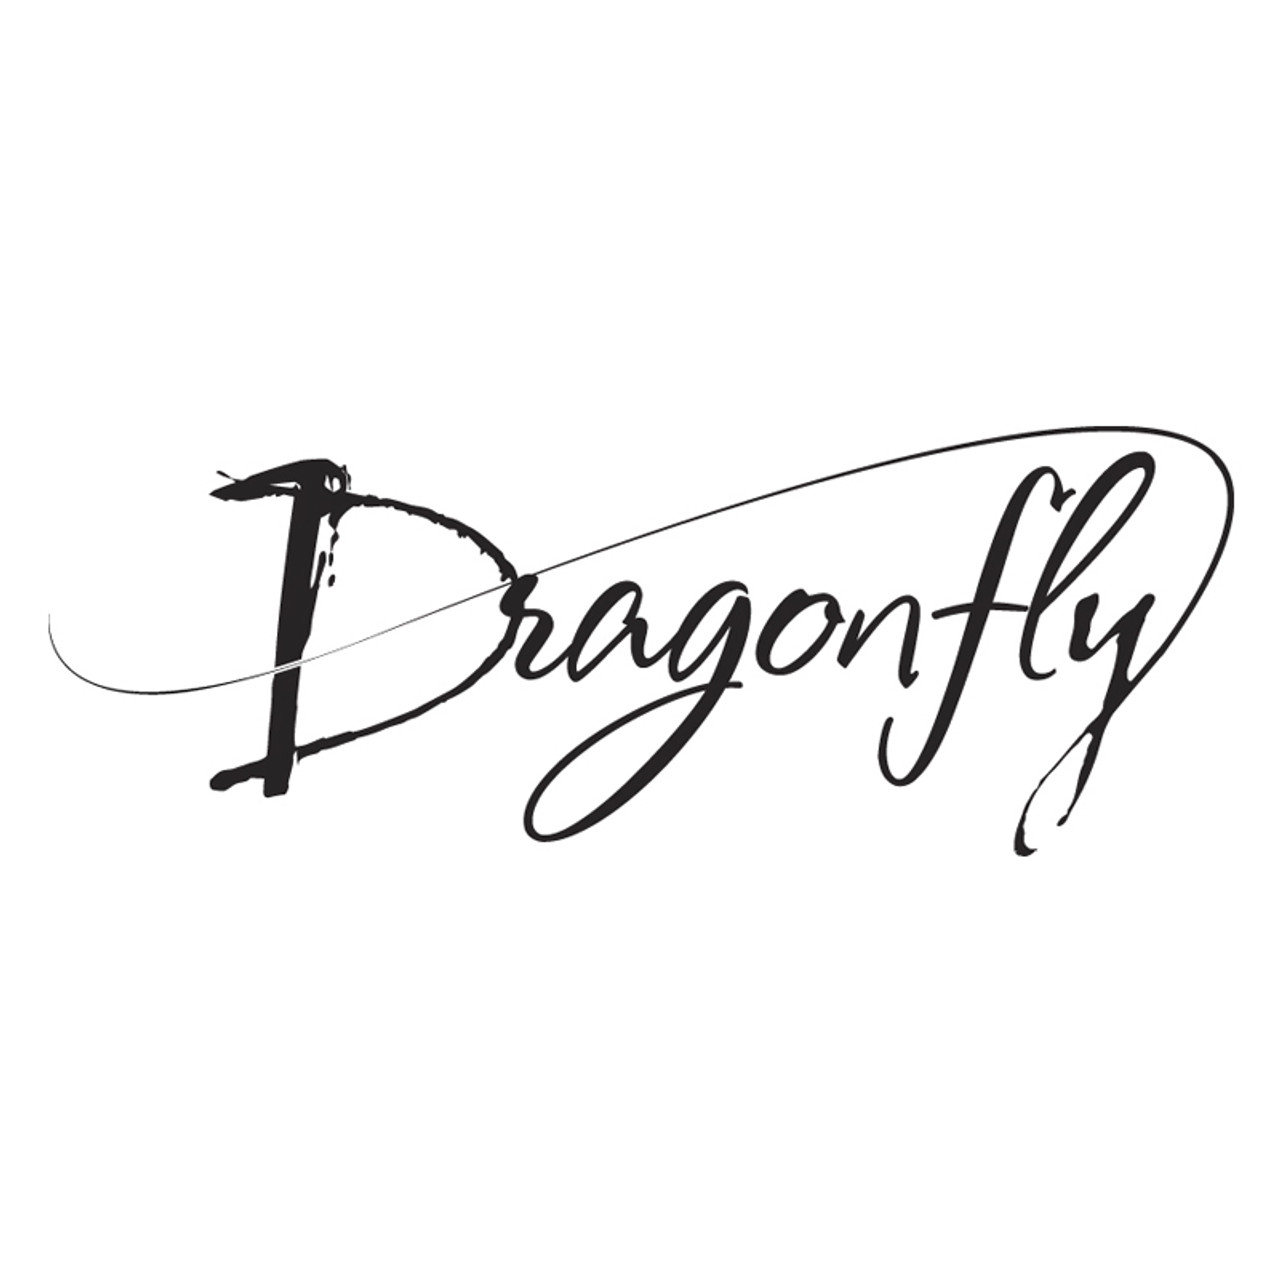 DRAGONFLY ZINGER